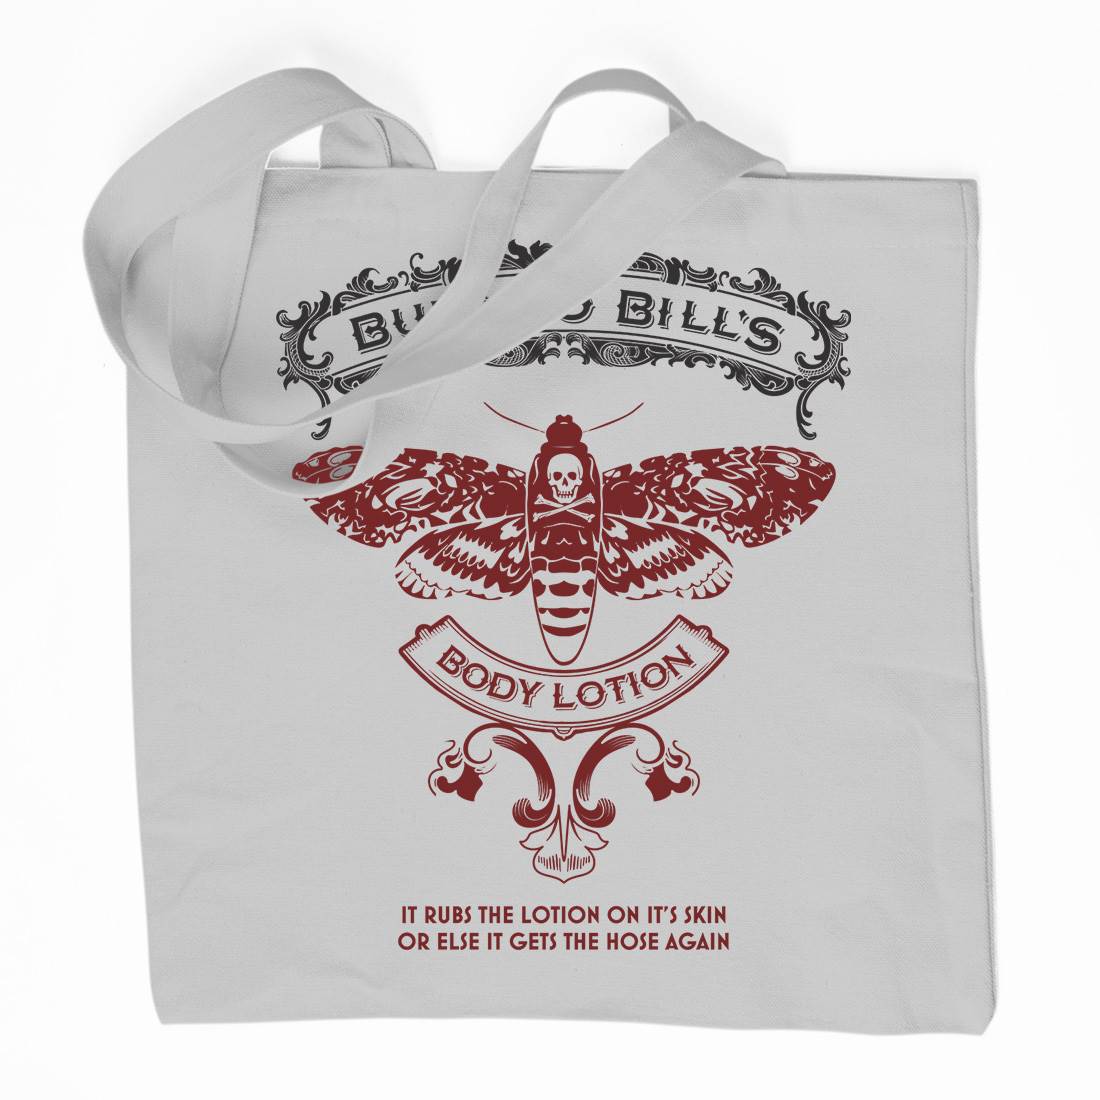 Buffalo Bills Body Lotion Organic Premium Cotton Tote Bag Horror D269